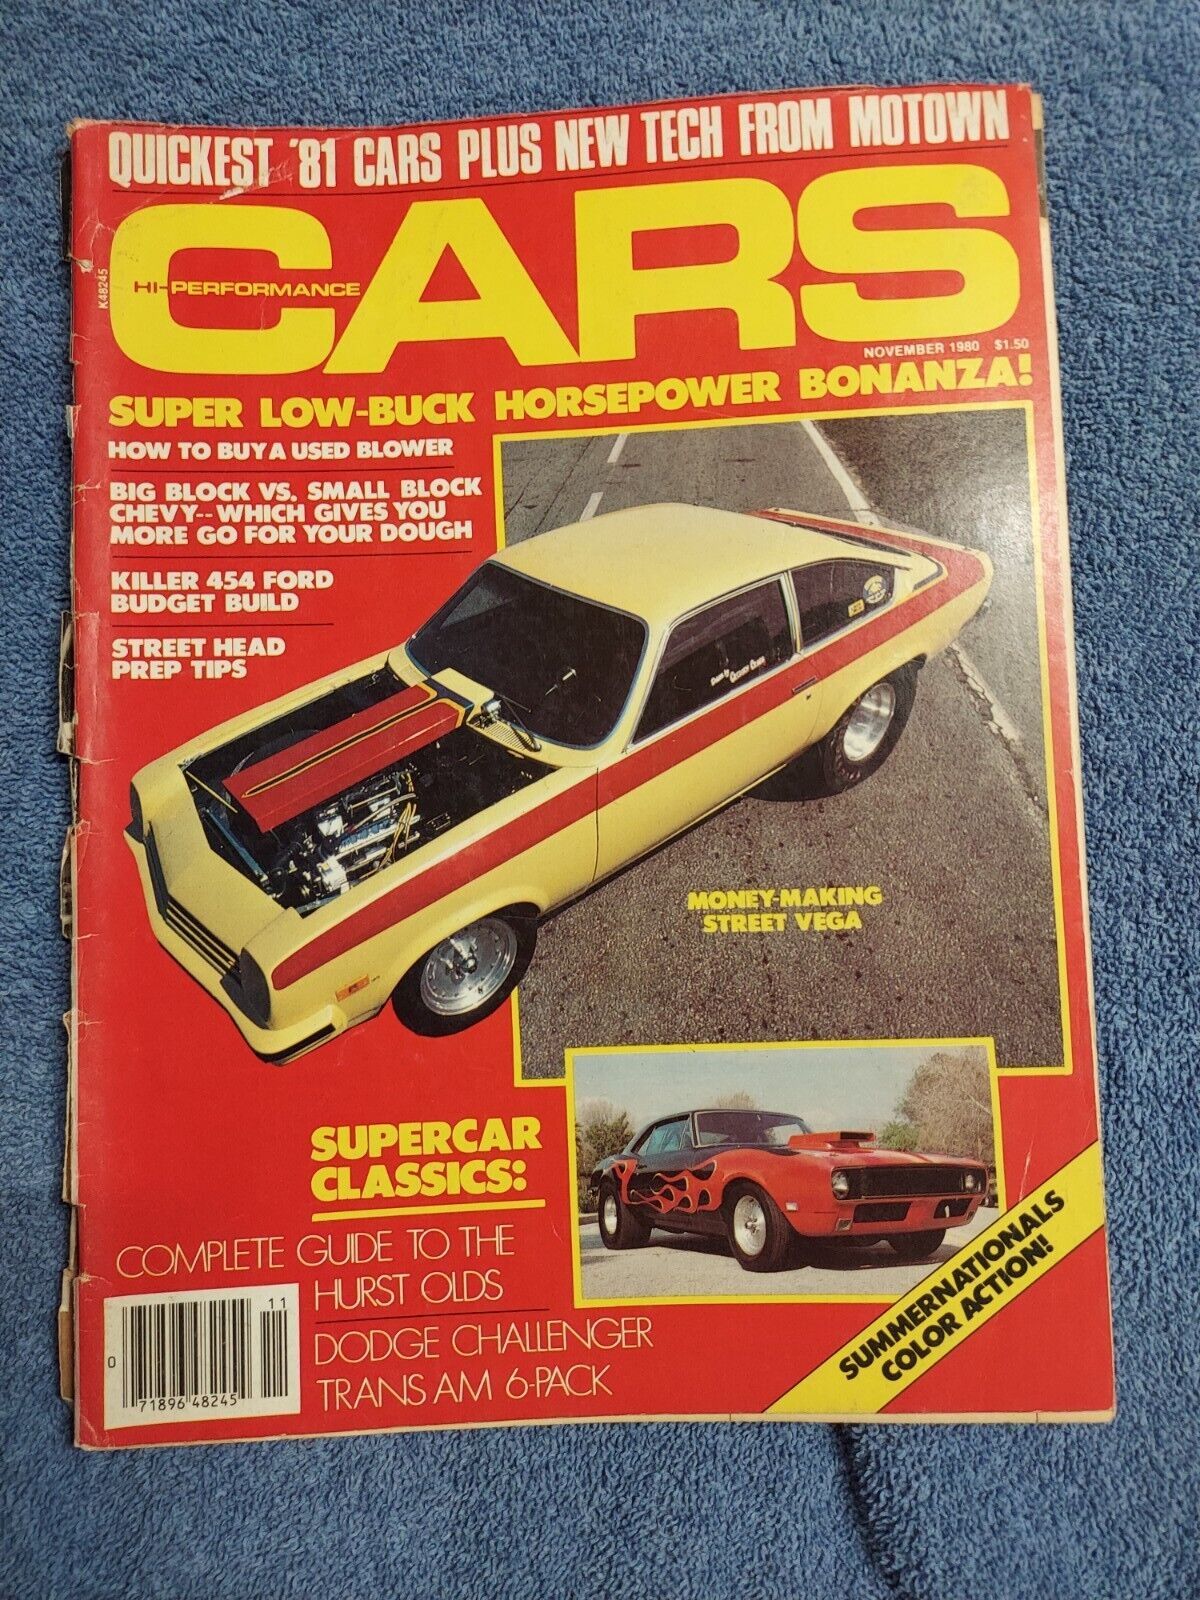 HI Performance Cars Magazine November 1980 Super Low Buck HP Bonanza *READ DESCR